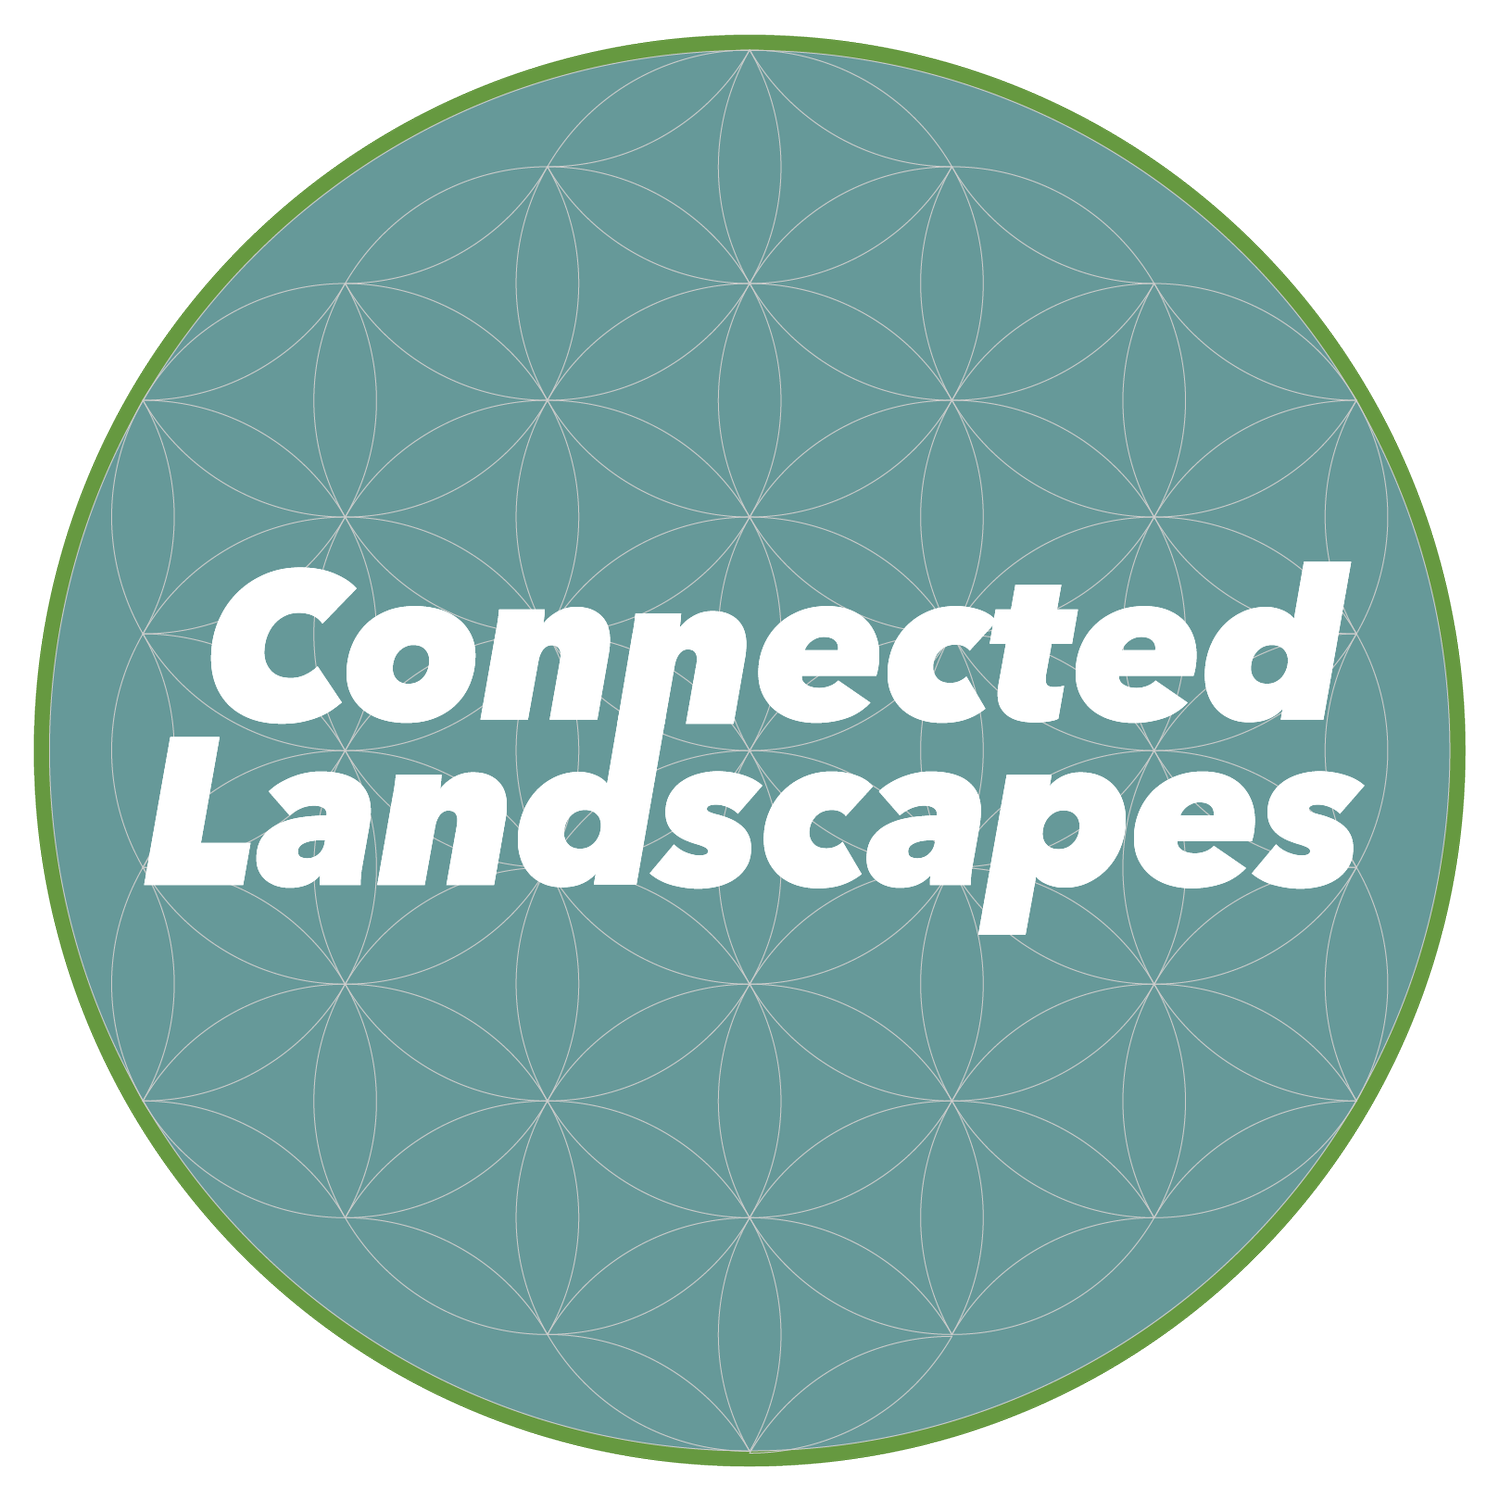 Connected Landscapes